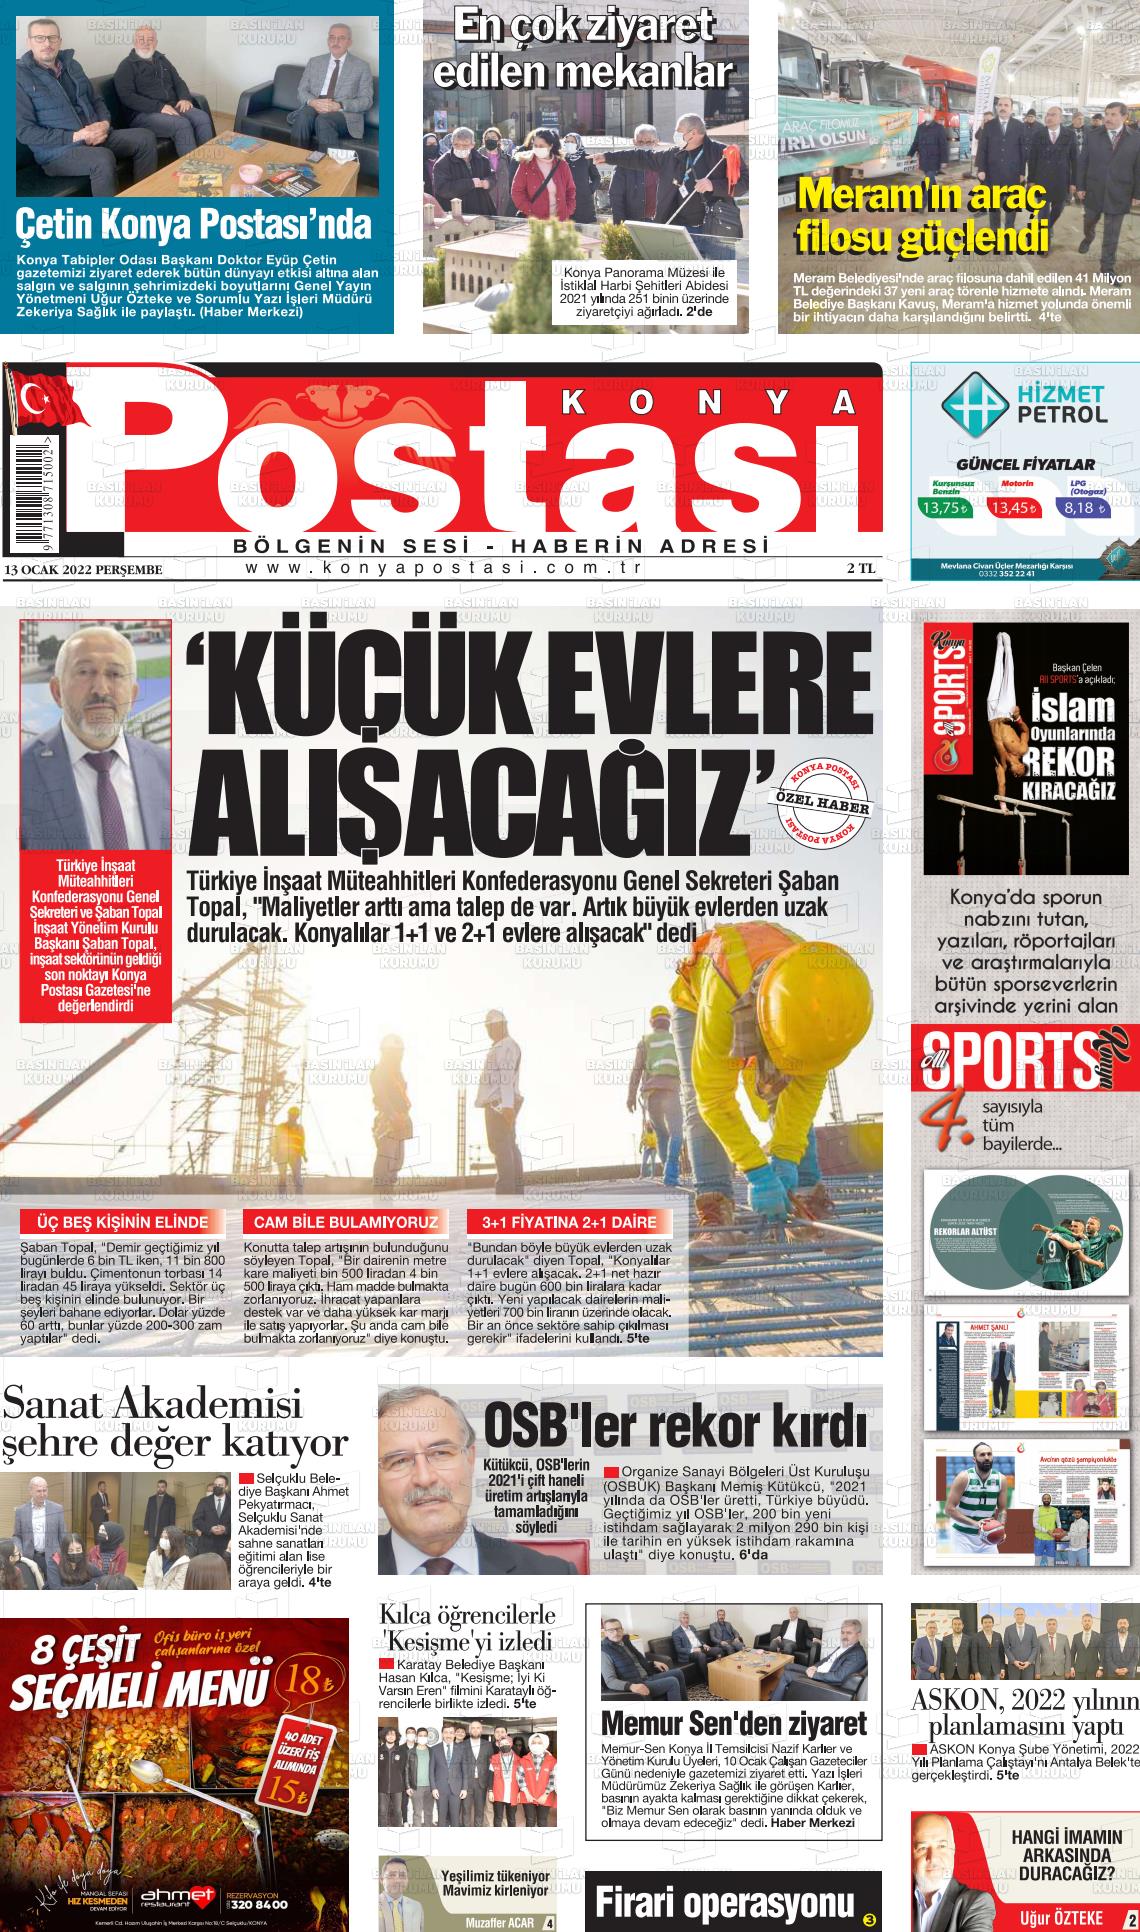 13 Ocak 2022 Konya Postası Gazete Manşeti